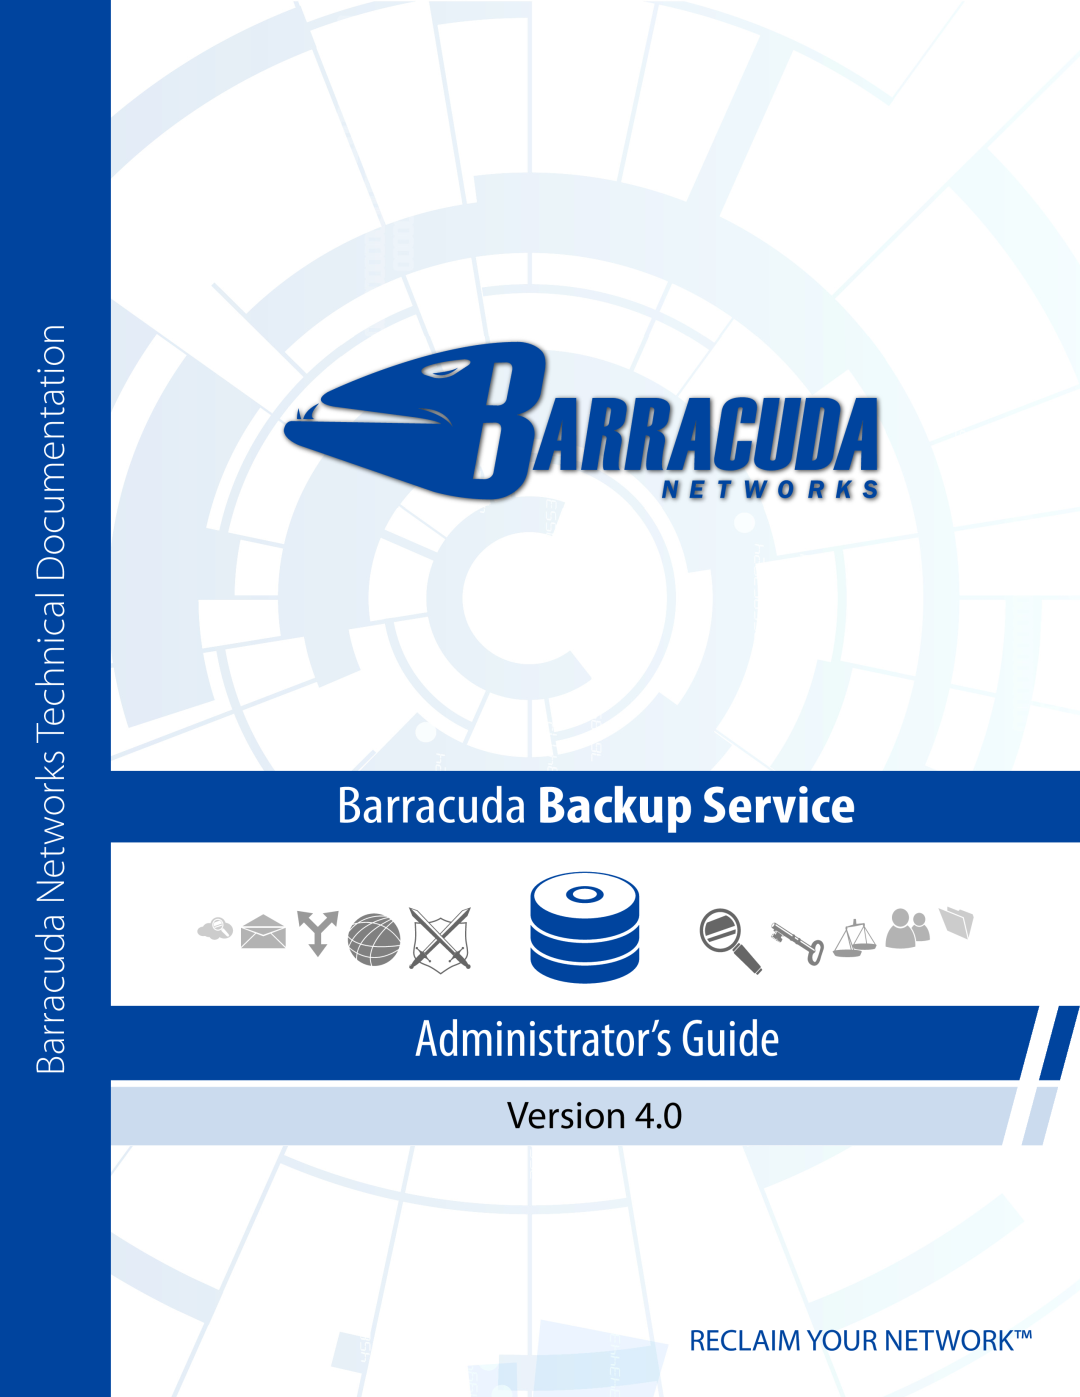 Barracuda Networks 4 manual Barracuda Backup Service, Administrator’s Guide, Barracuda Networks Technical Documentation 